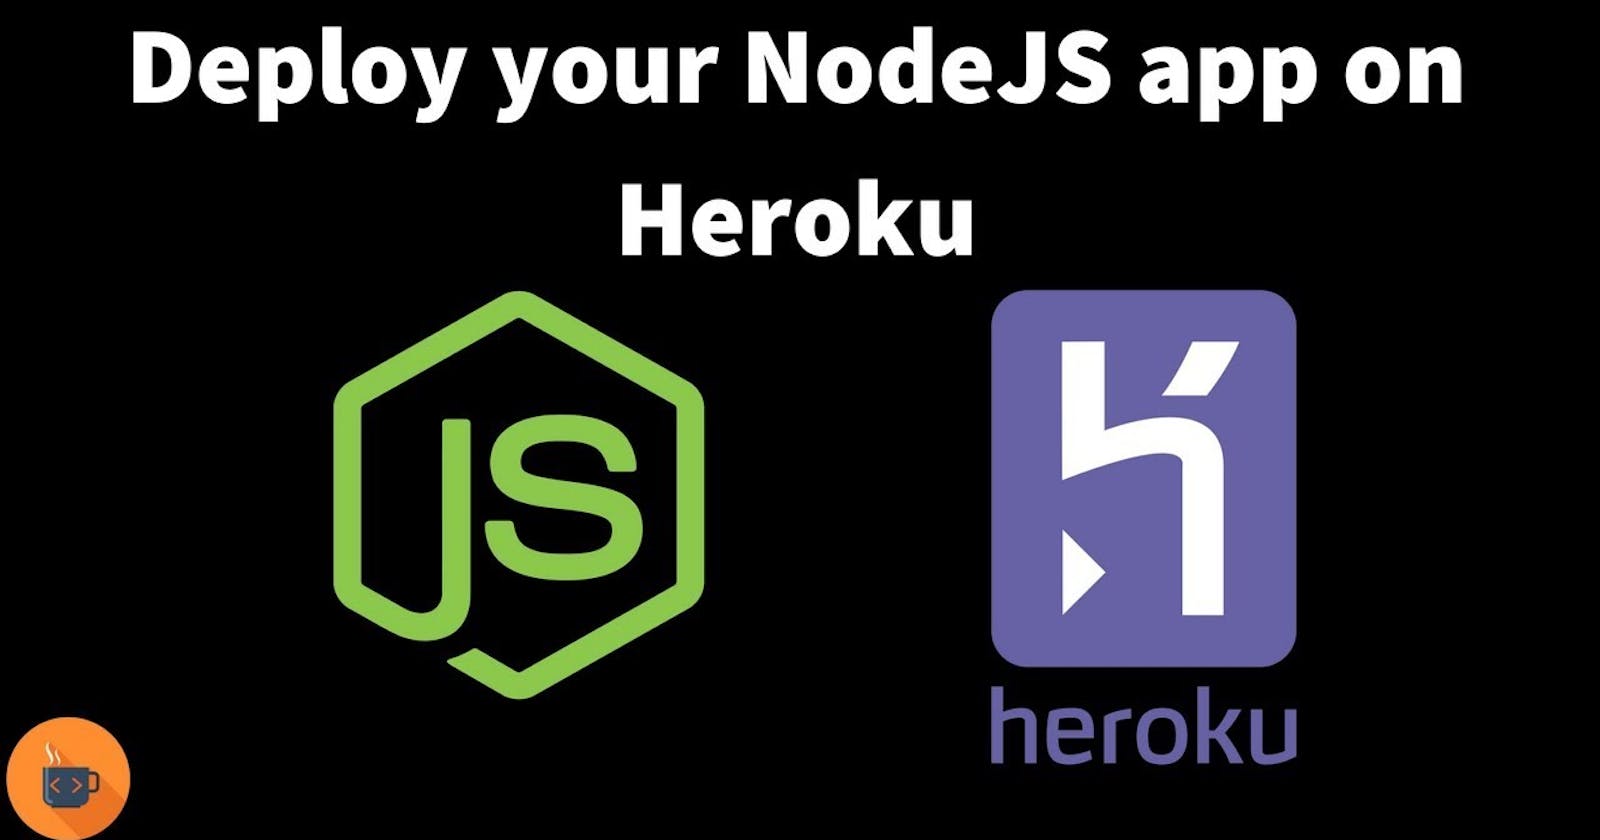 Deploying nodejs application on Heroku cloud